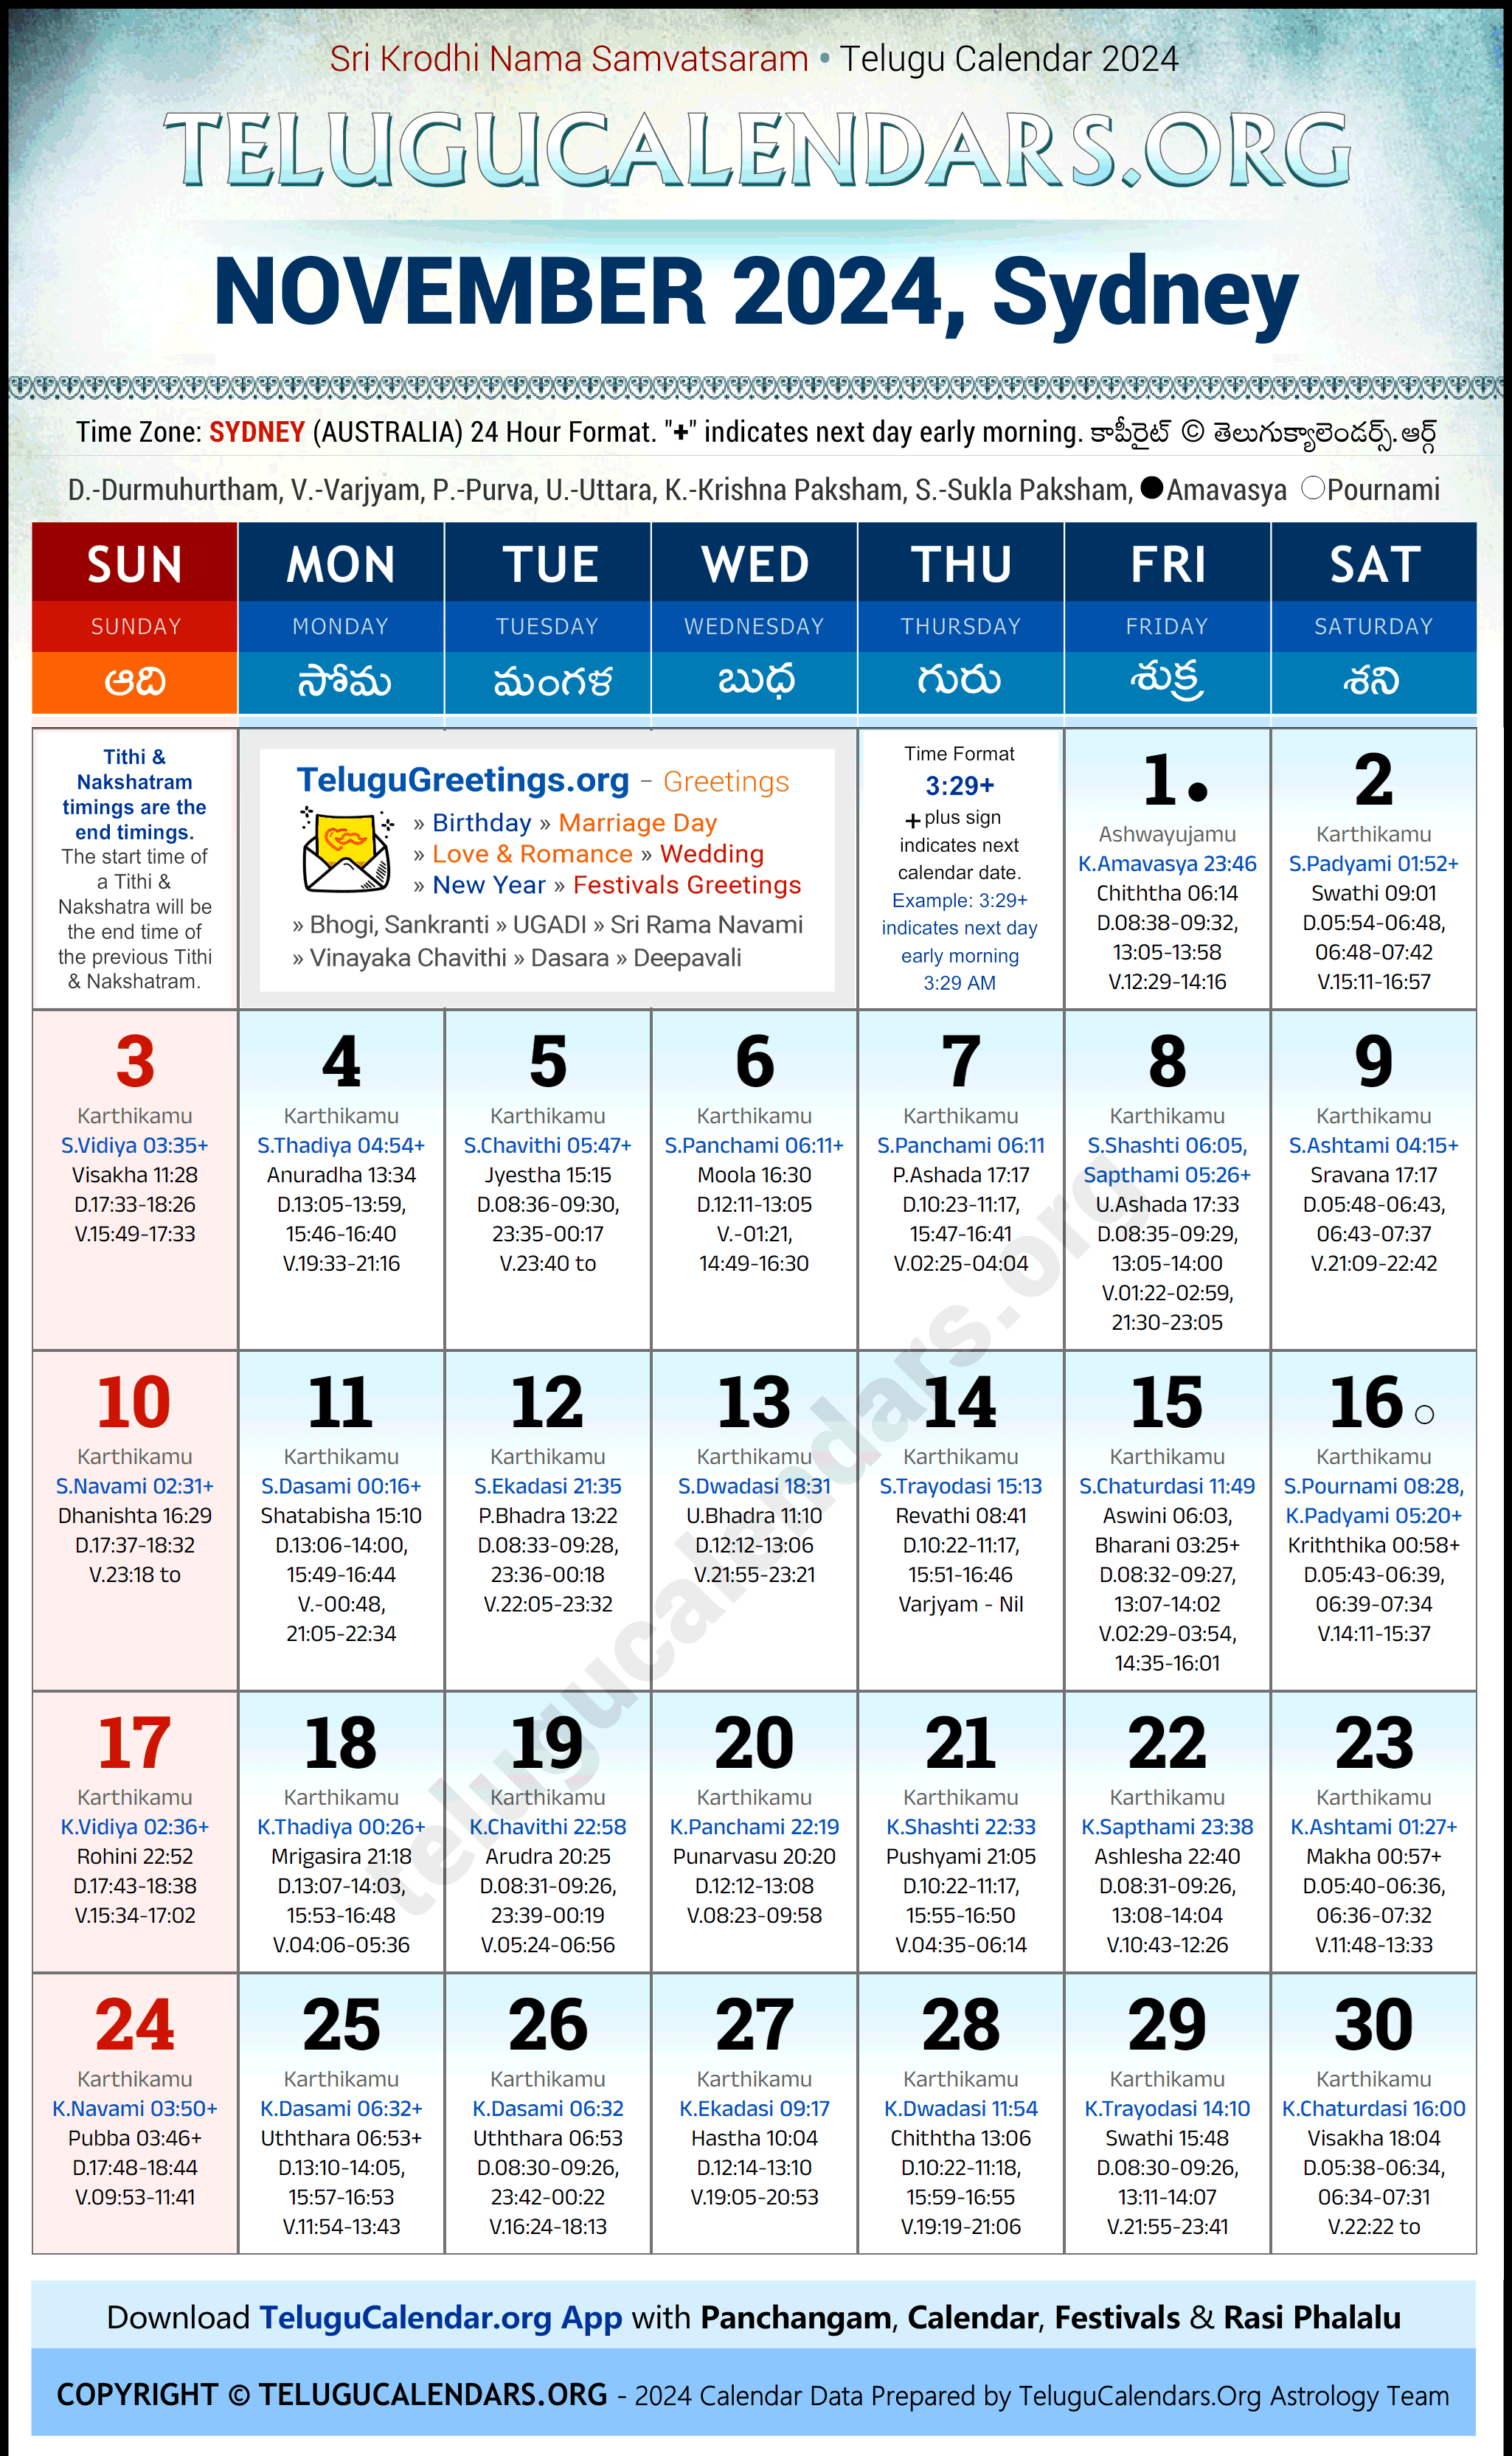 Telugu Calendar 2024 November Festivals for Sydney